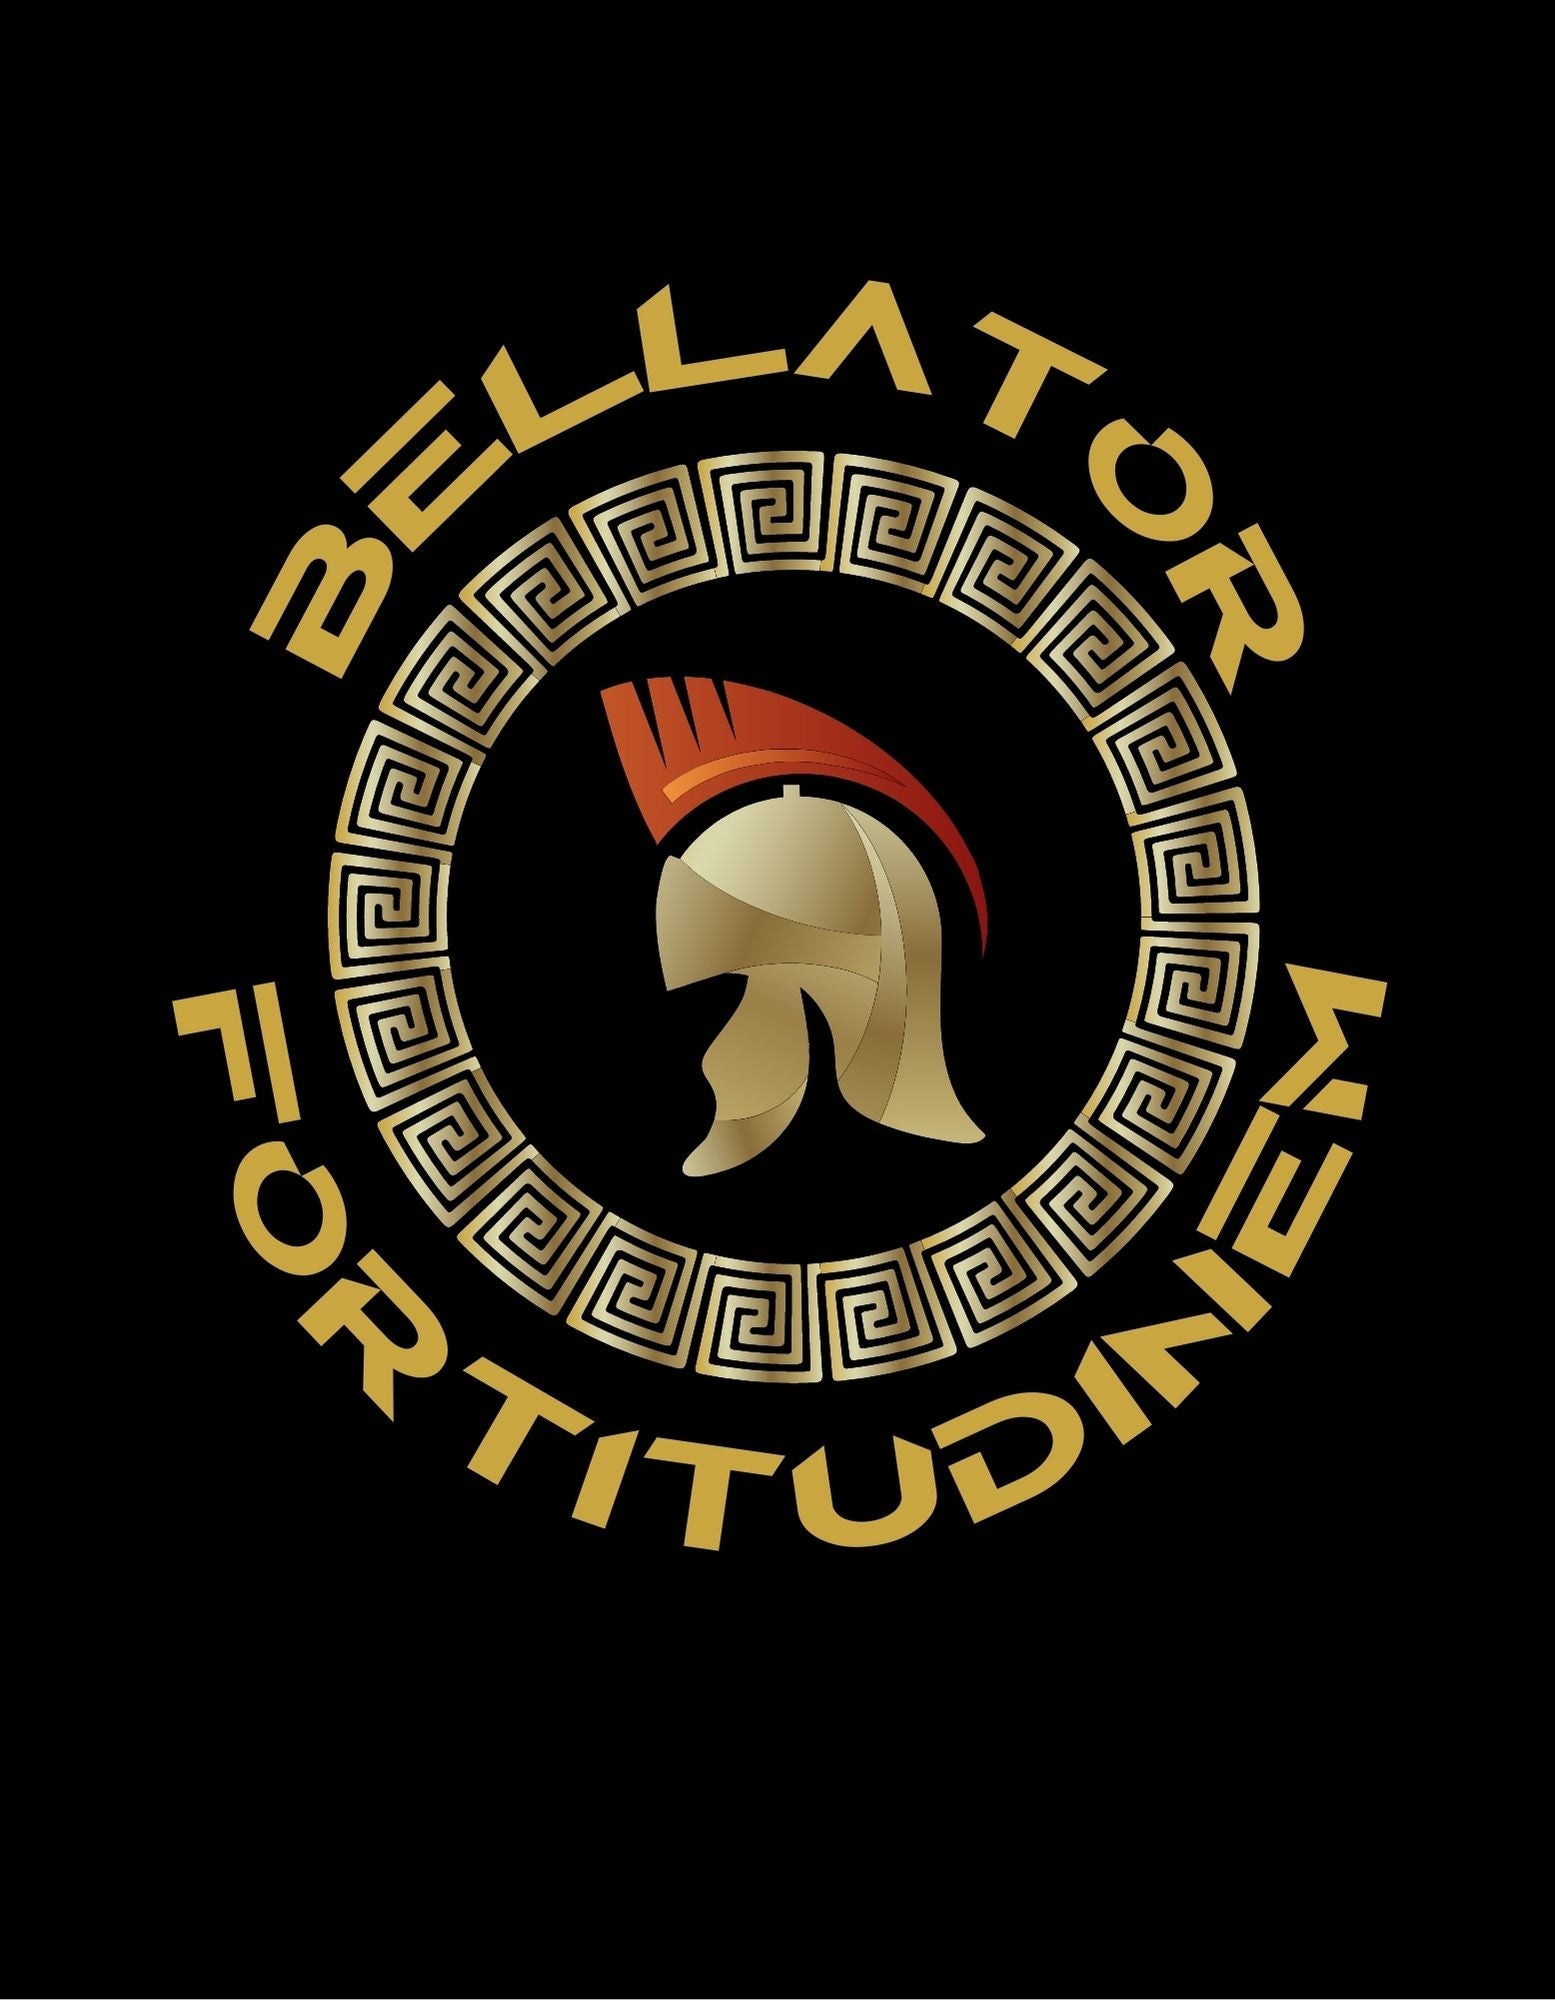 Bellator Fortitudinem - Front and Back - Unisex Tshirt - Three2Tango Tee's